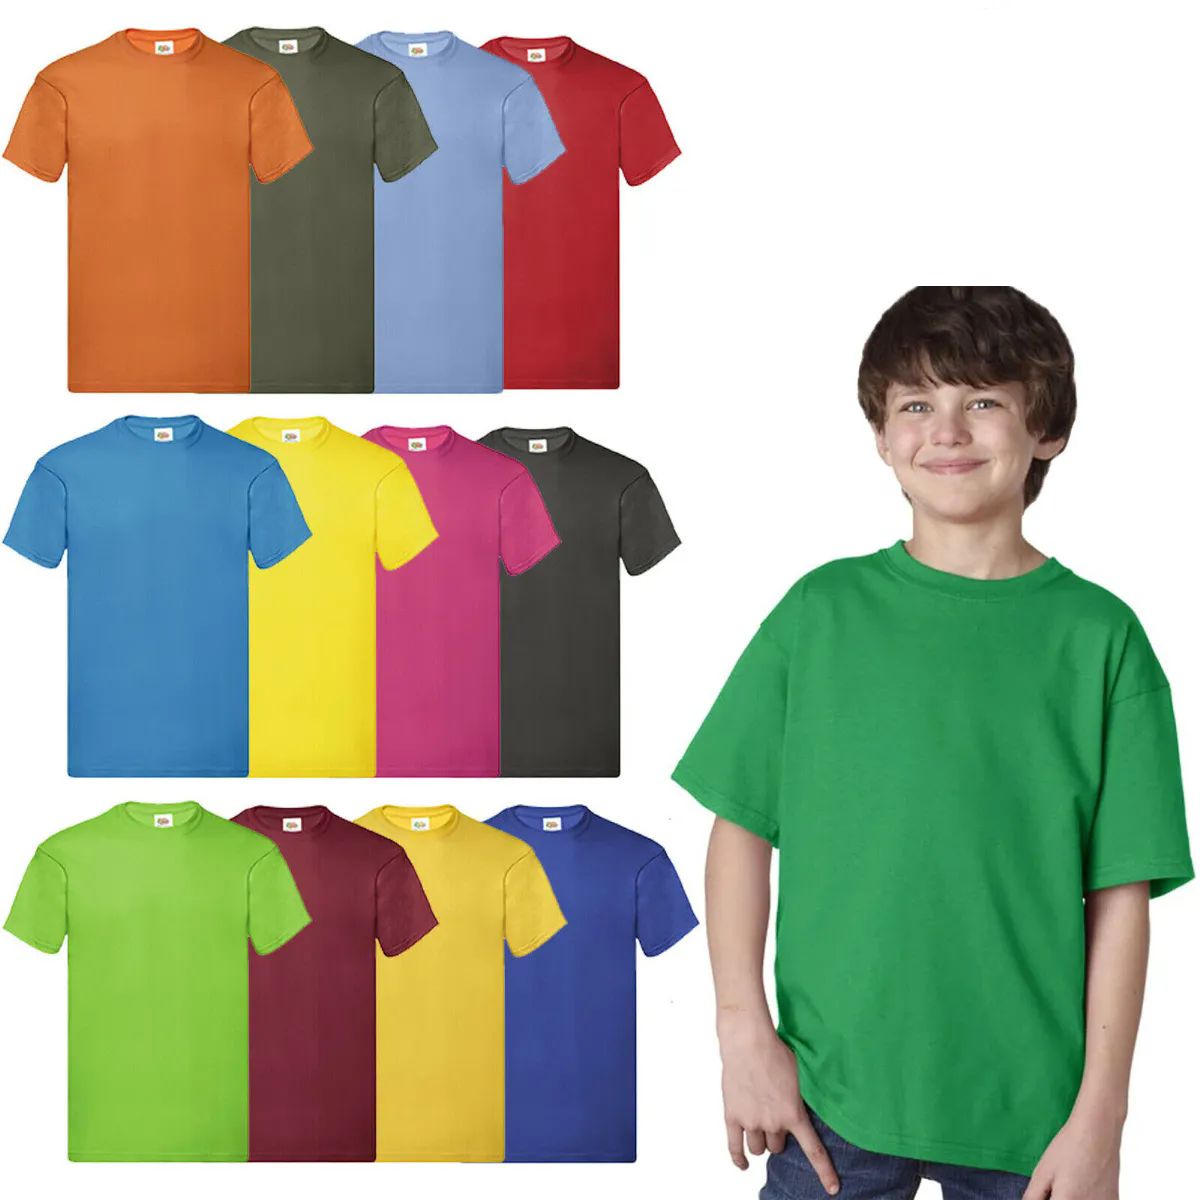 576 Bulk Billion Hats Kids Youth Cotton Assorted Colors T Shirts Size xs